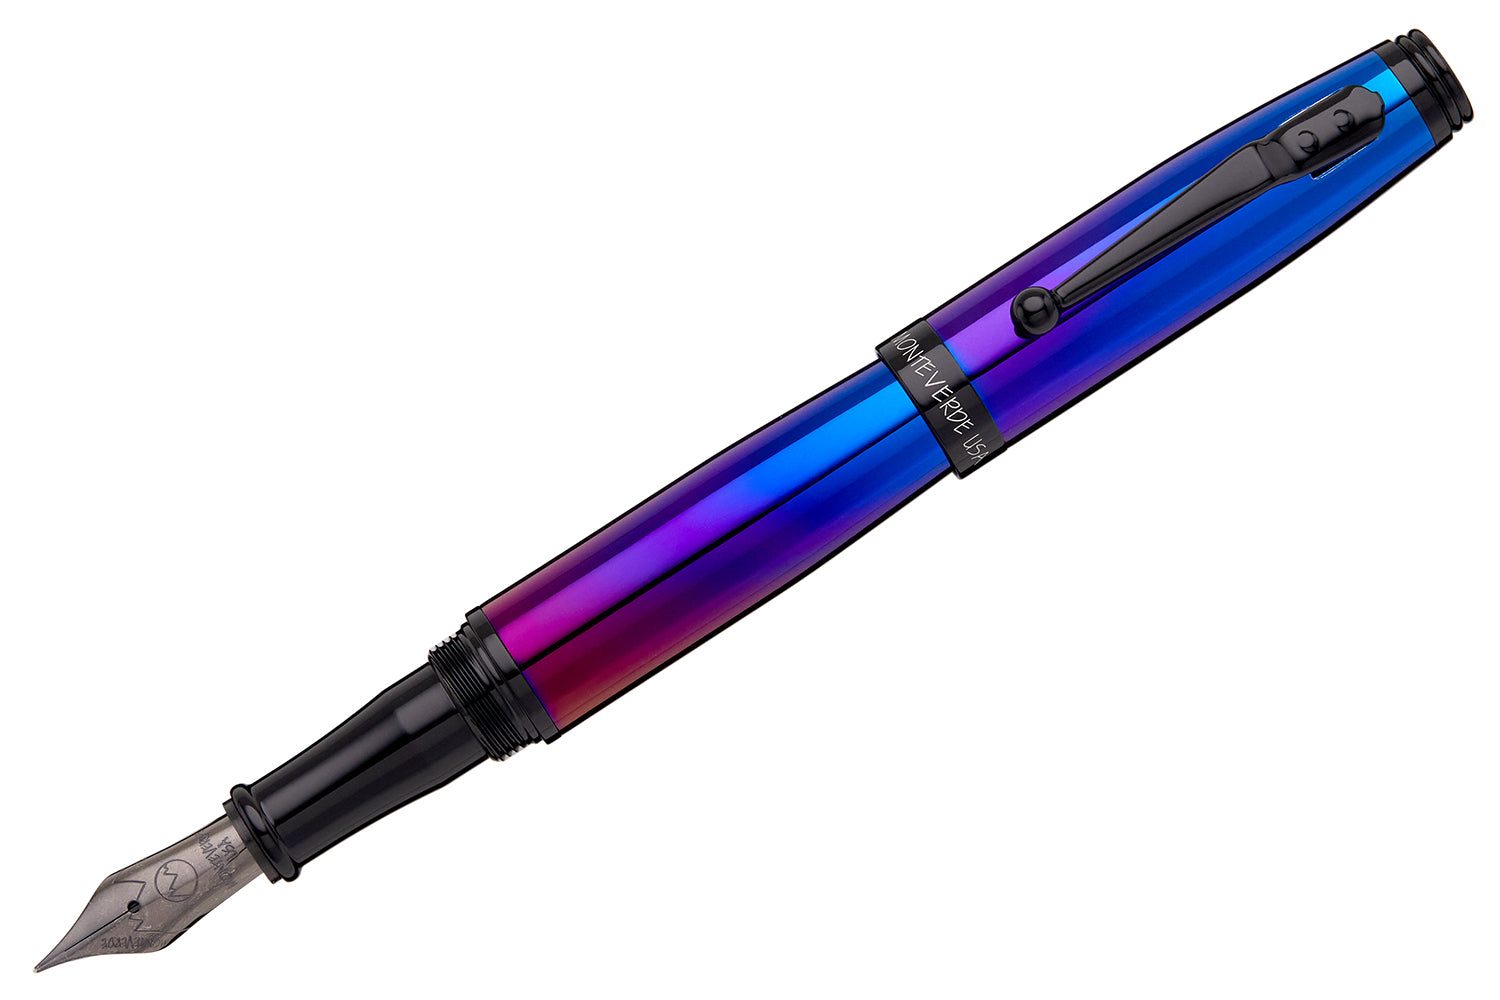 Rainbow Ombre Multi Color Ink Pen